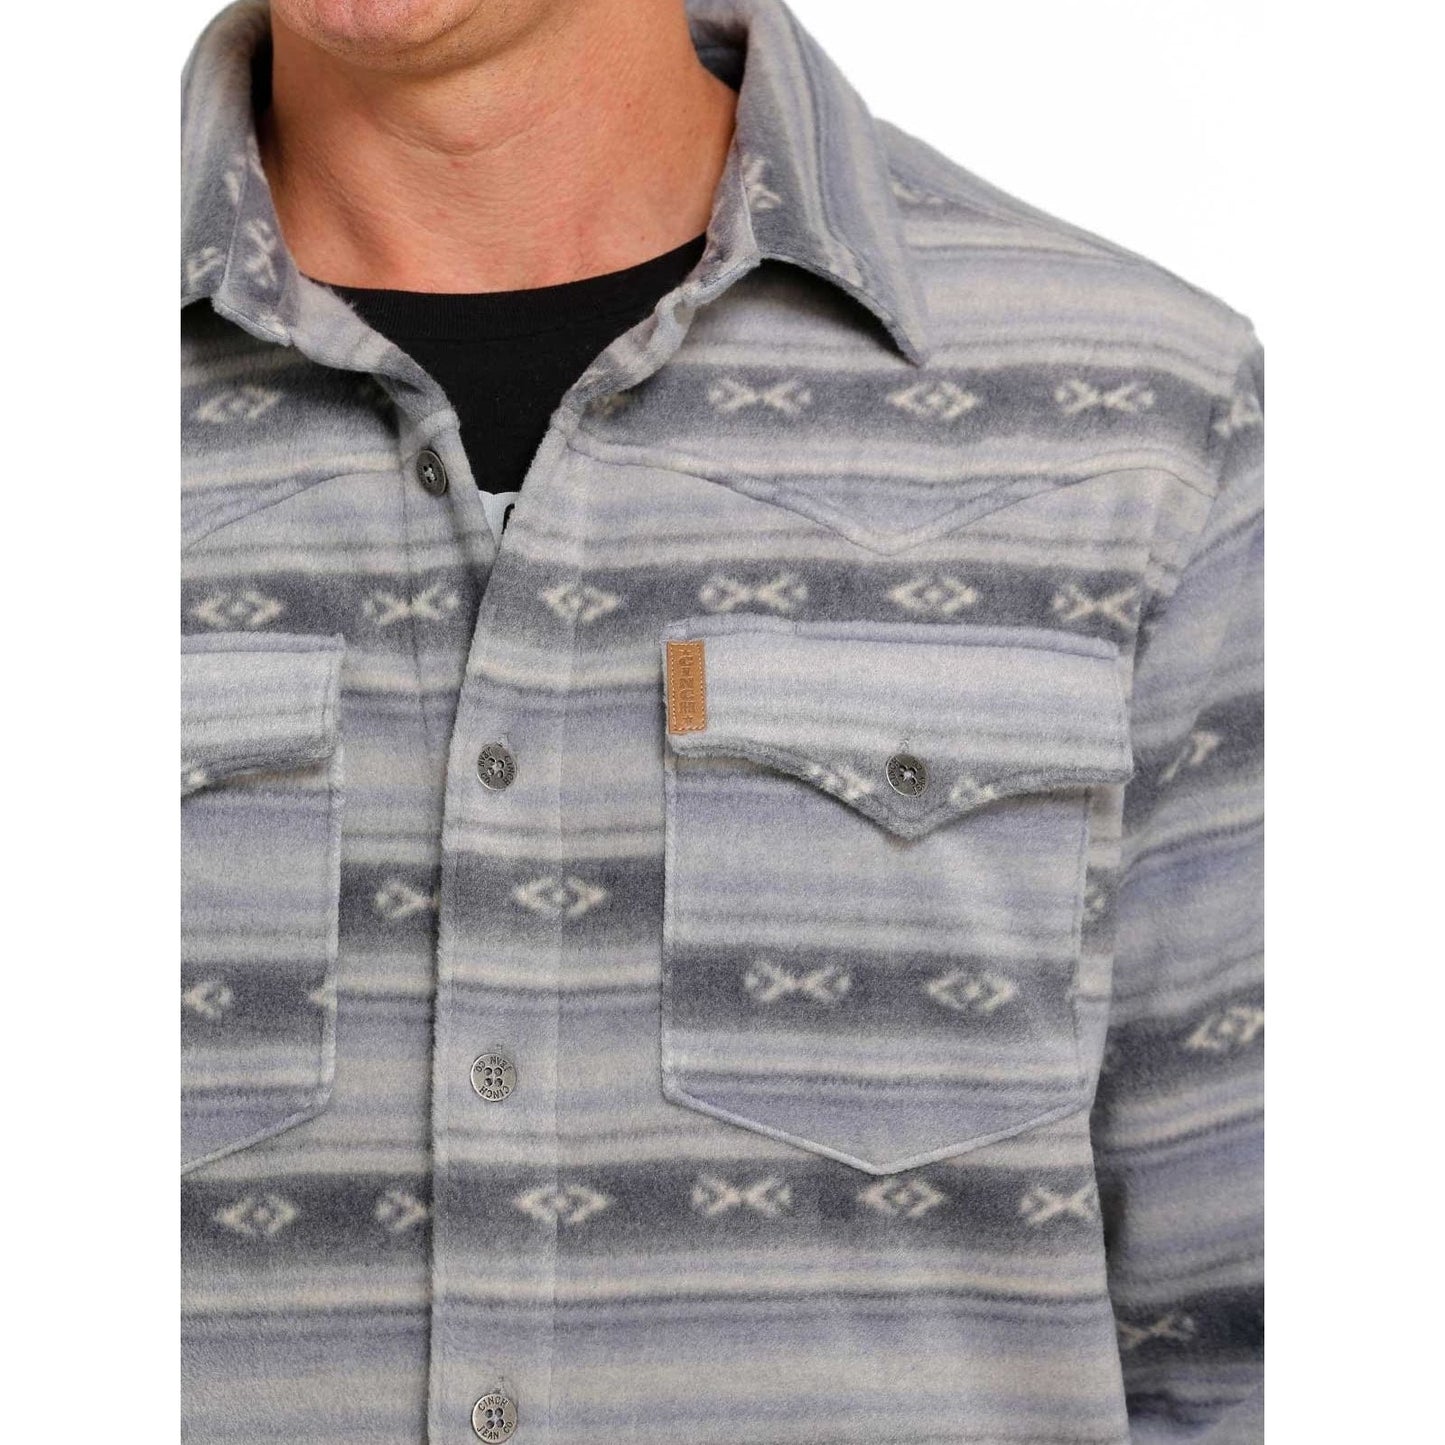 Cinch Men’s Shirt Jacket Polar Fleece Aztec Printed MWJ1580001 BLU - Cinch